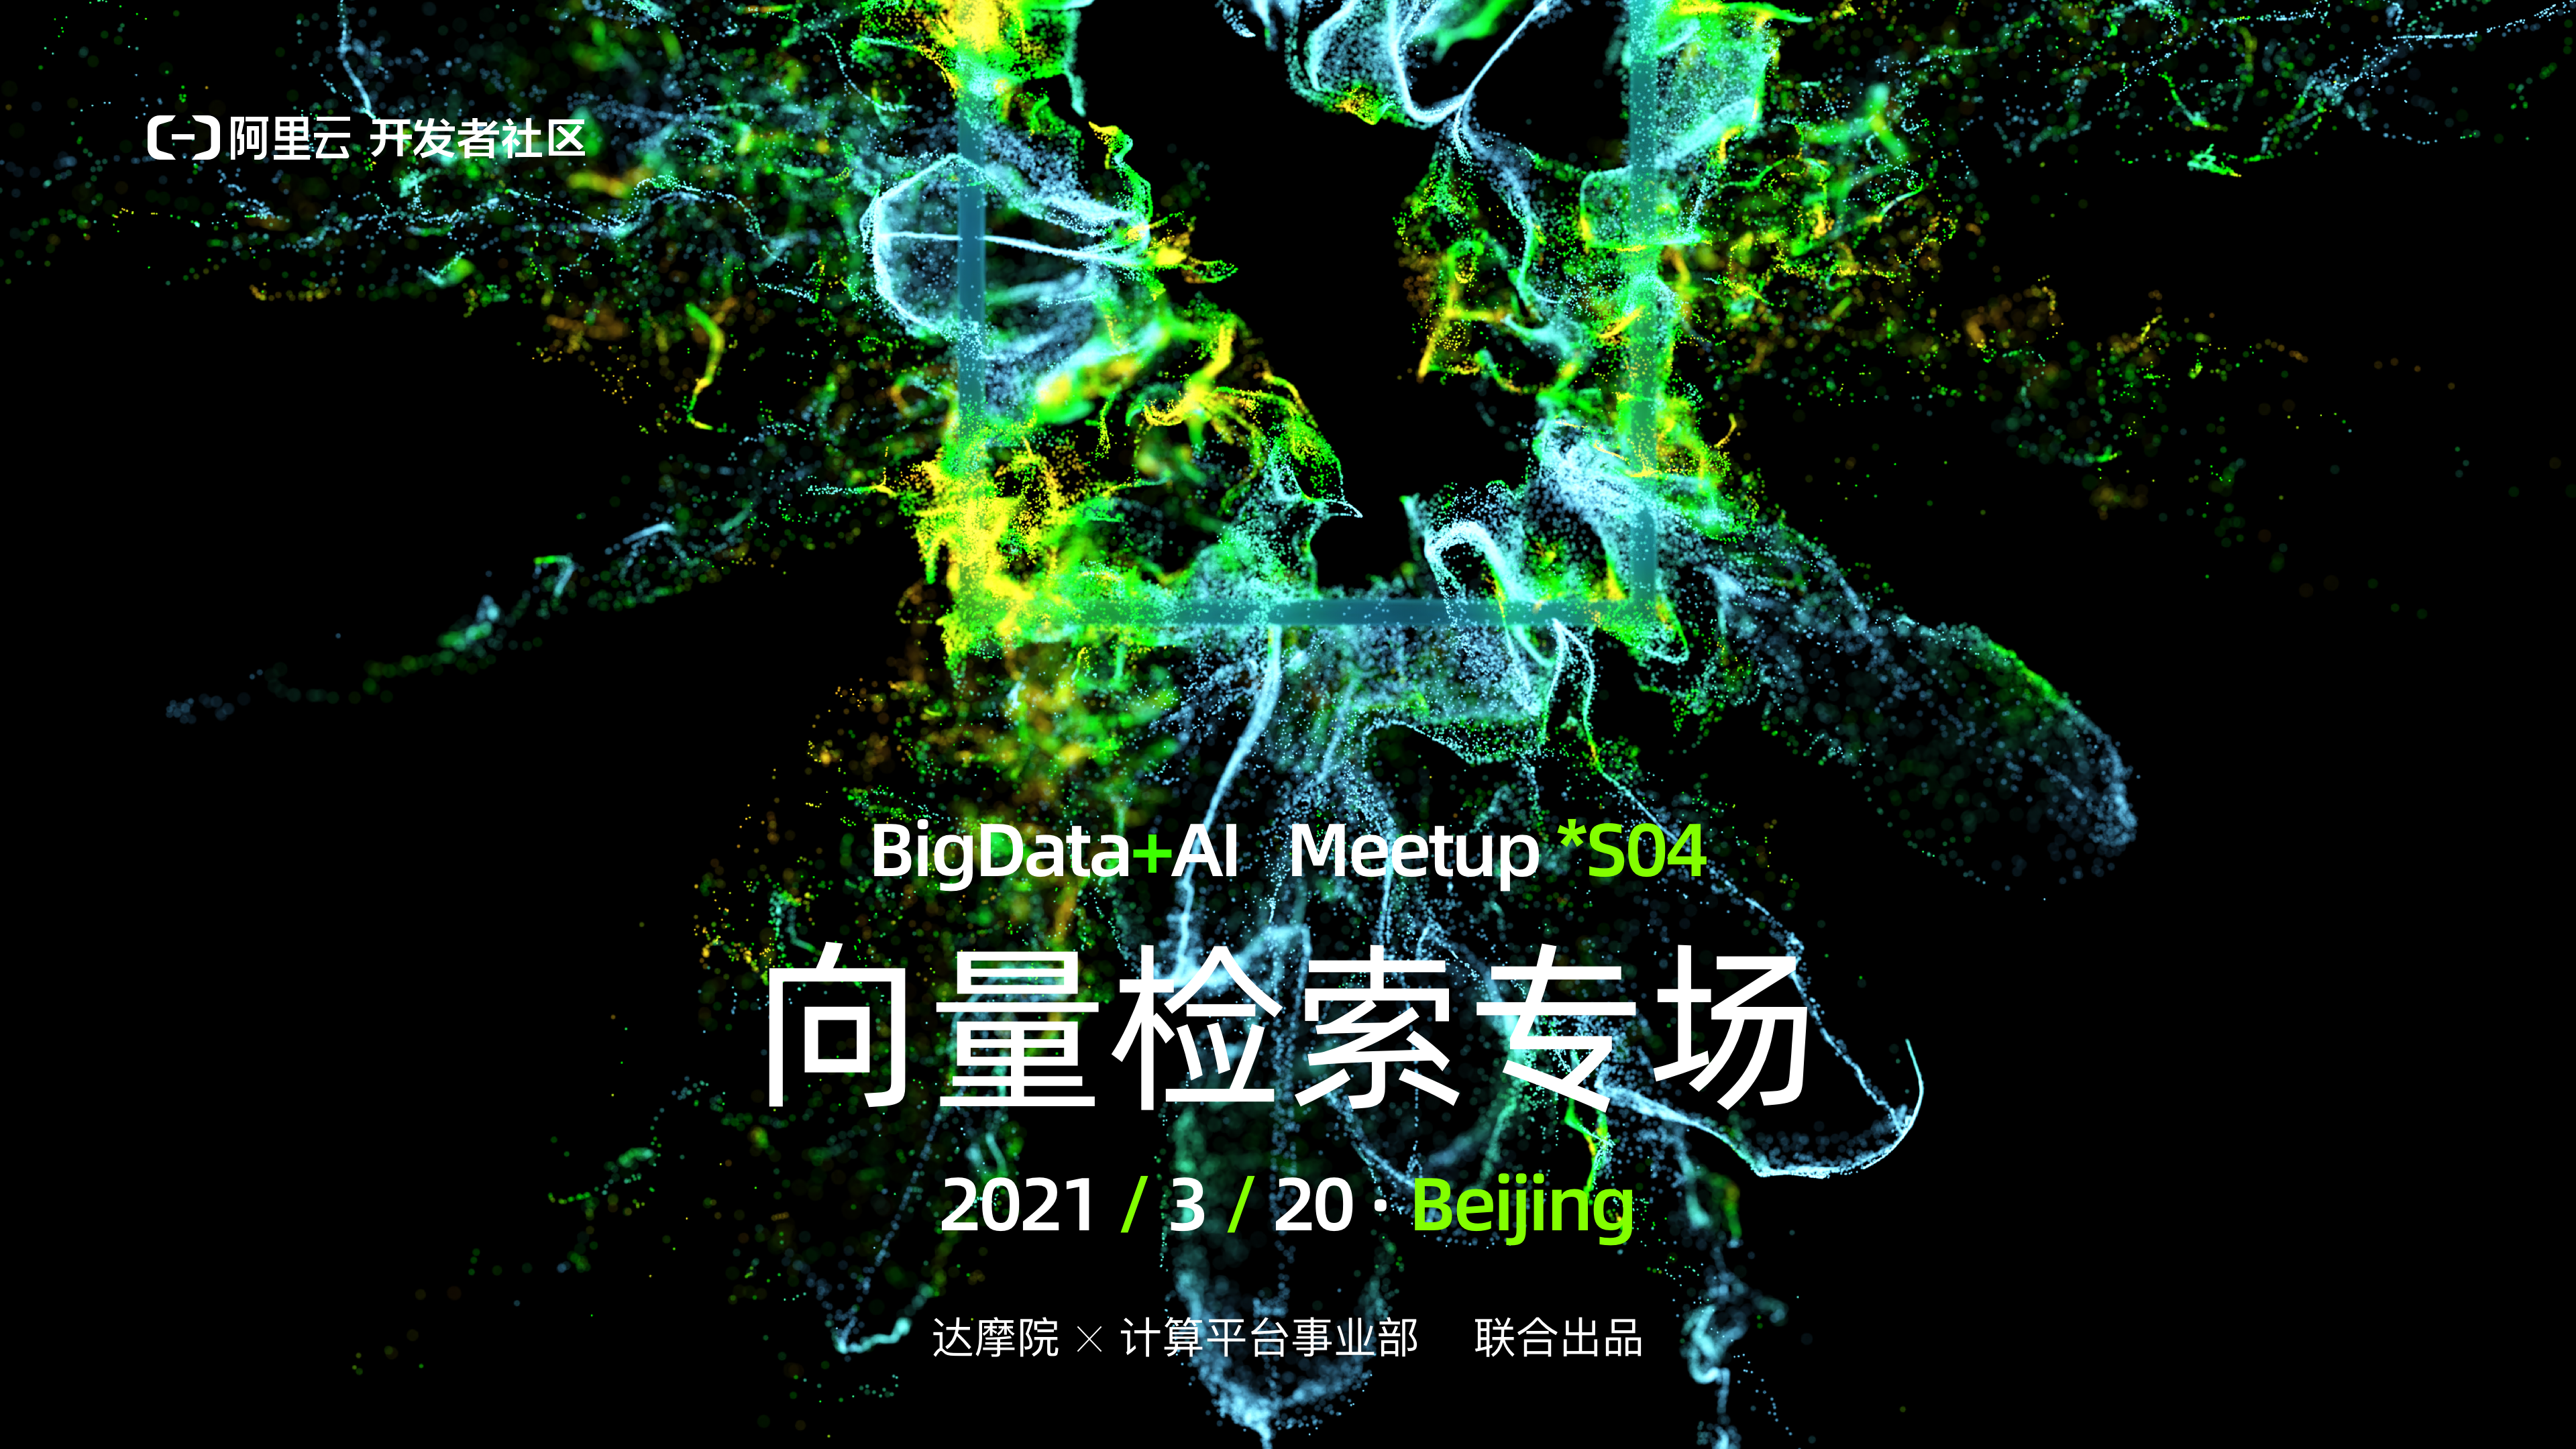 BigData+AI_Meetup_S04_KV 1920_1080@2x.png